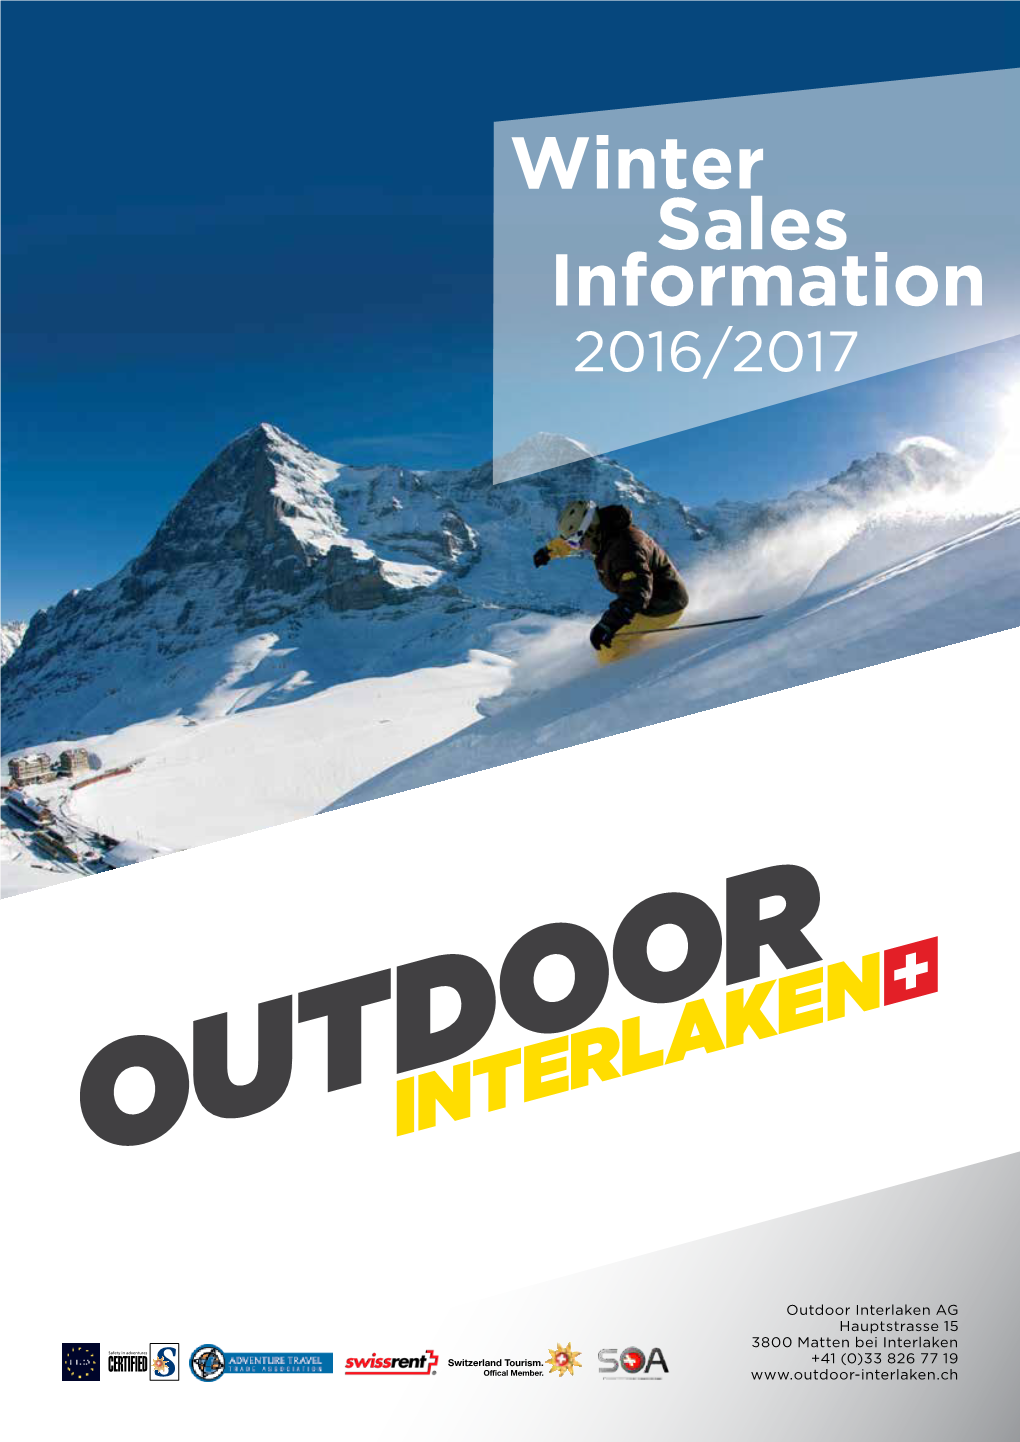 Winter Sales Information 2016/2017